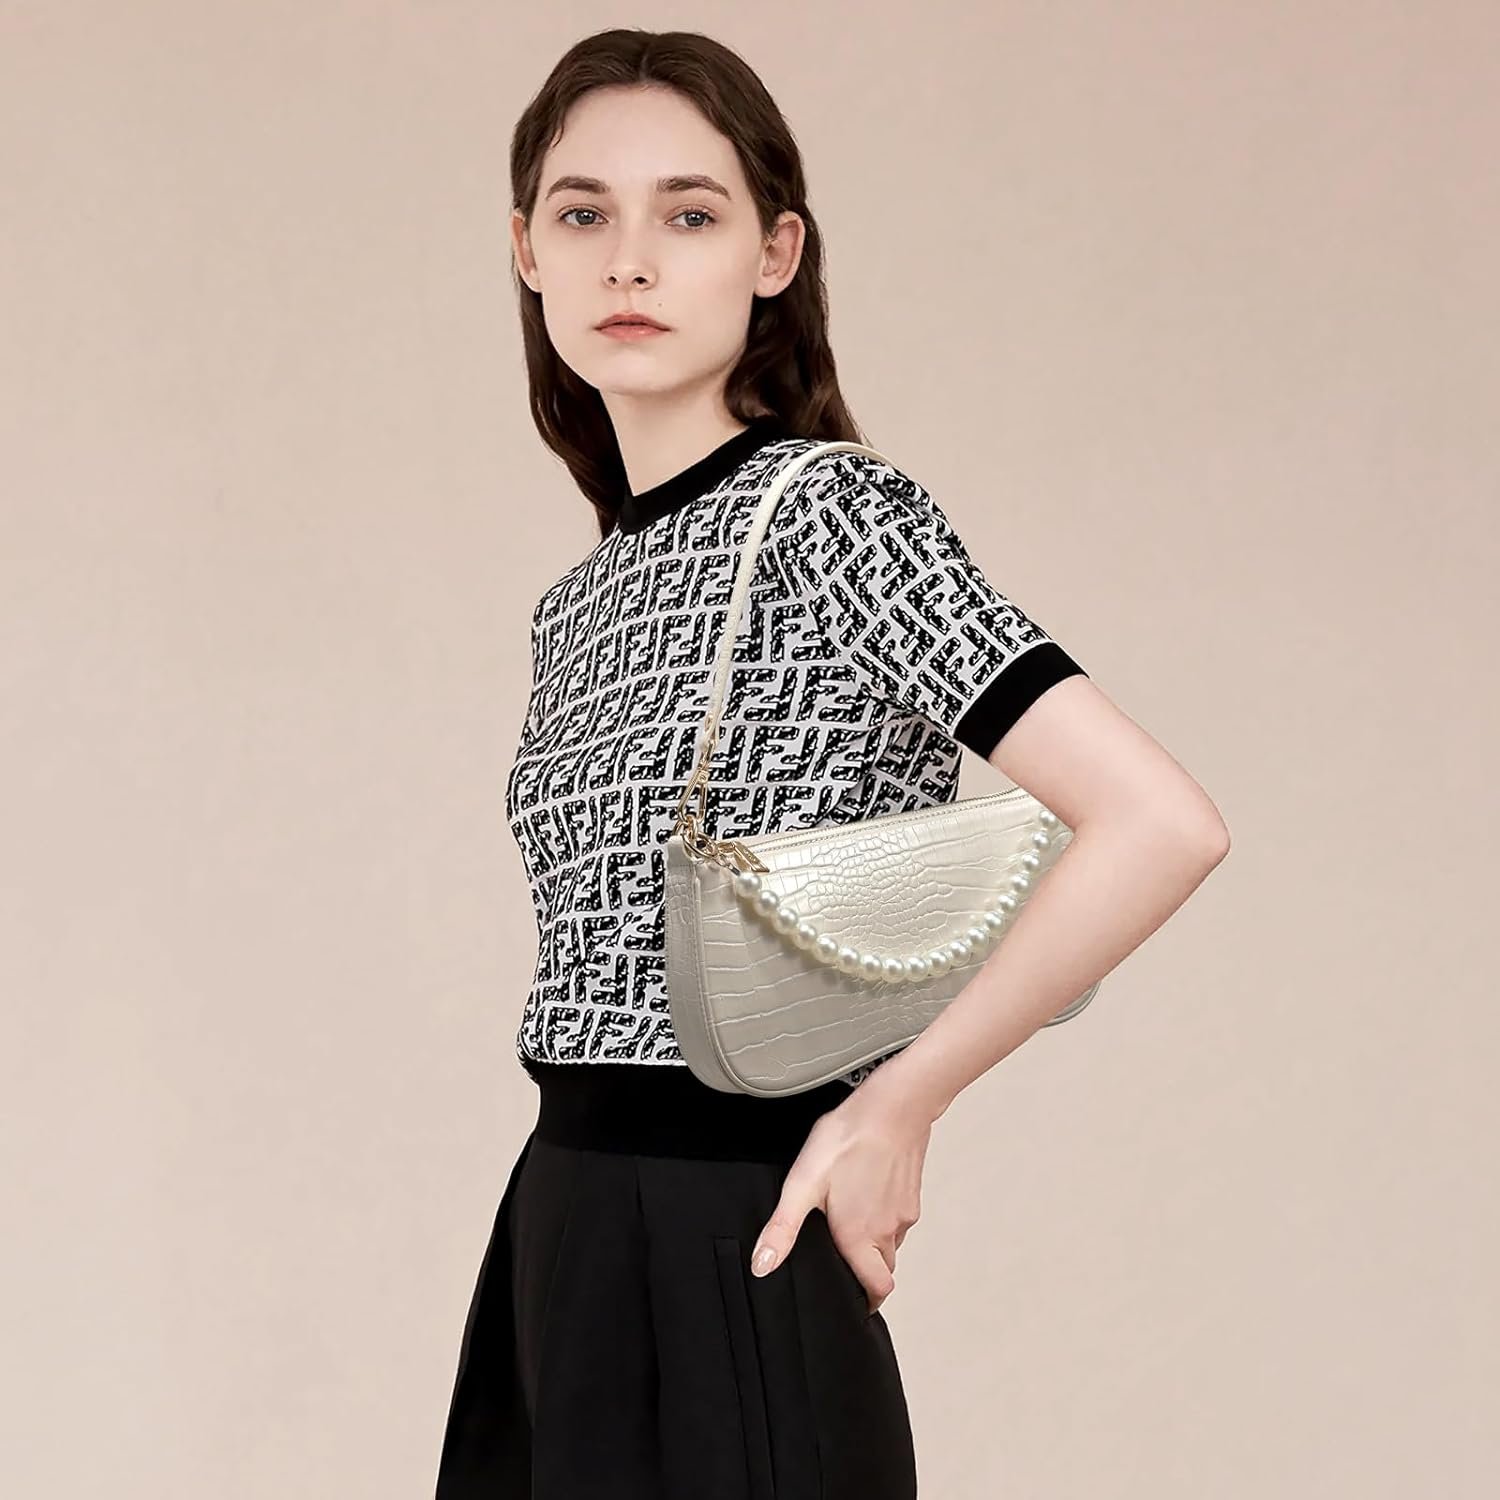 keyli shoulder bag for women crocodile pattern leather handbags trendy casual zip closure clutch hobo purse with pearls 1